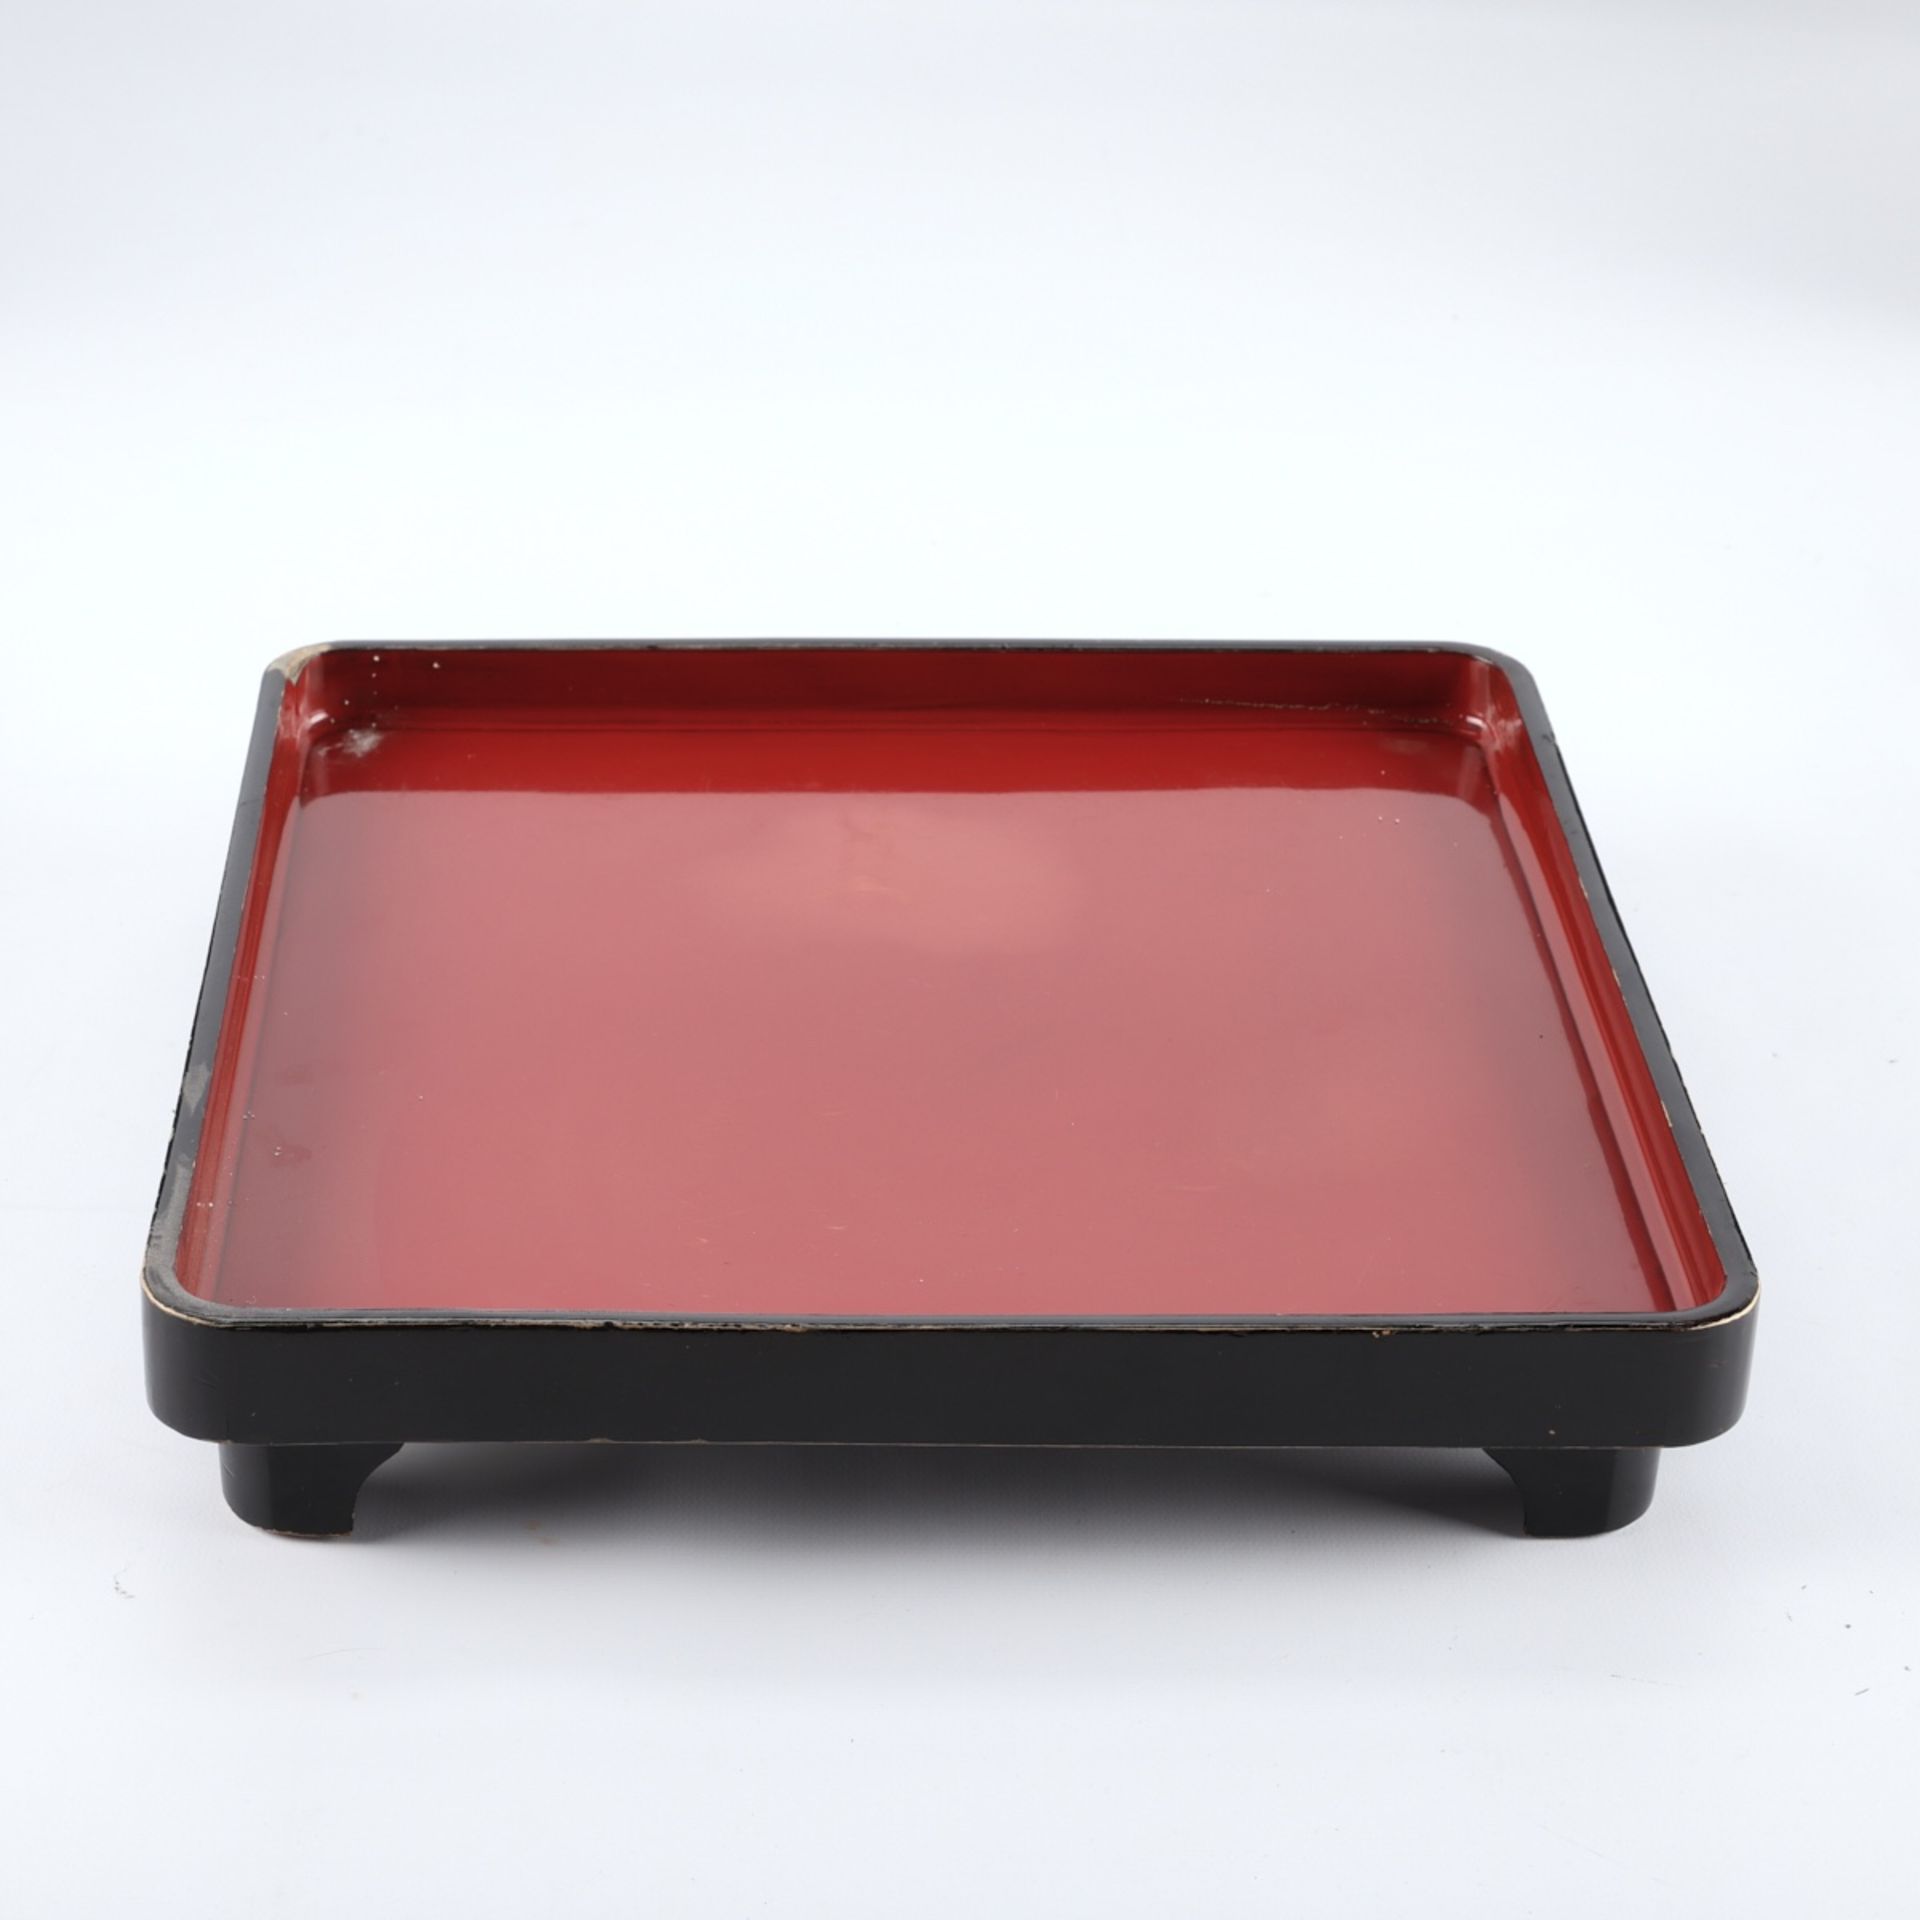 Set 20 Japanese Edo Lacquer Plates in Box - Image 8 of 13